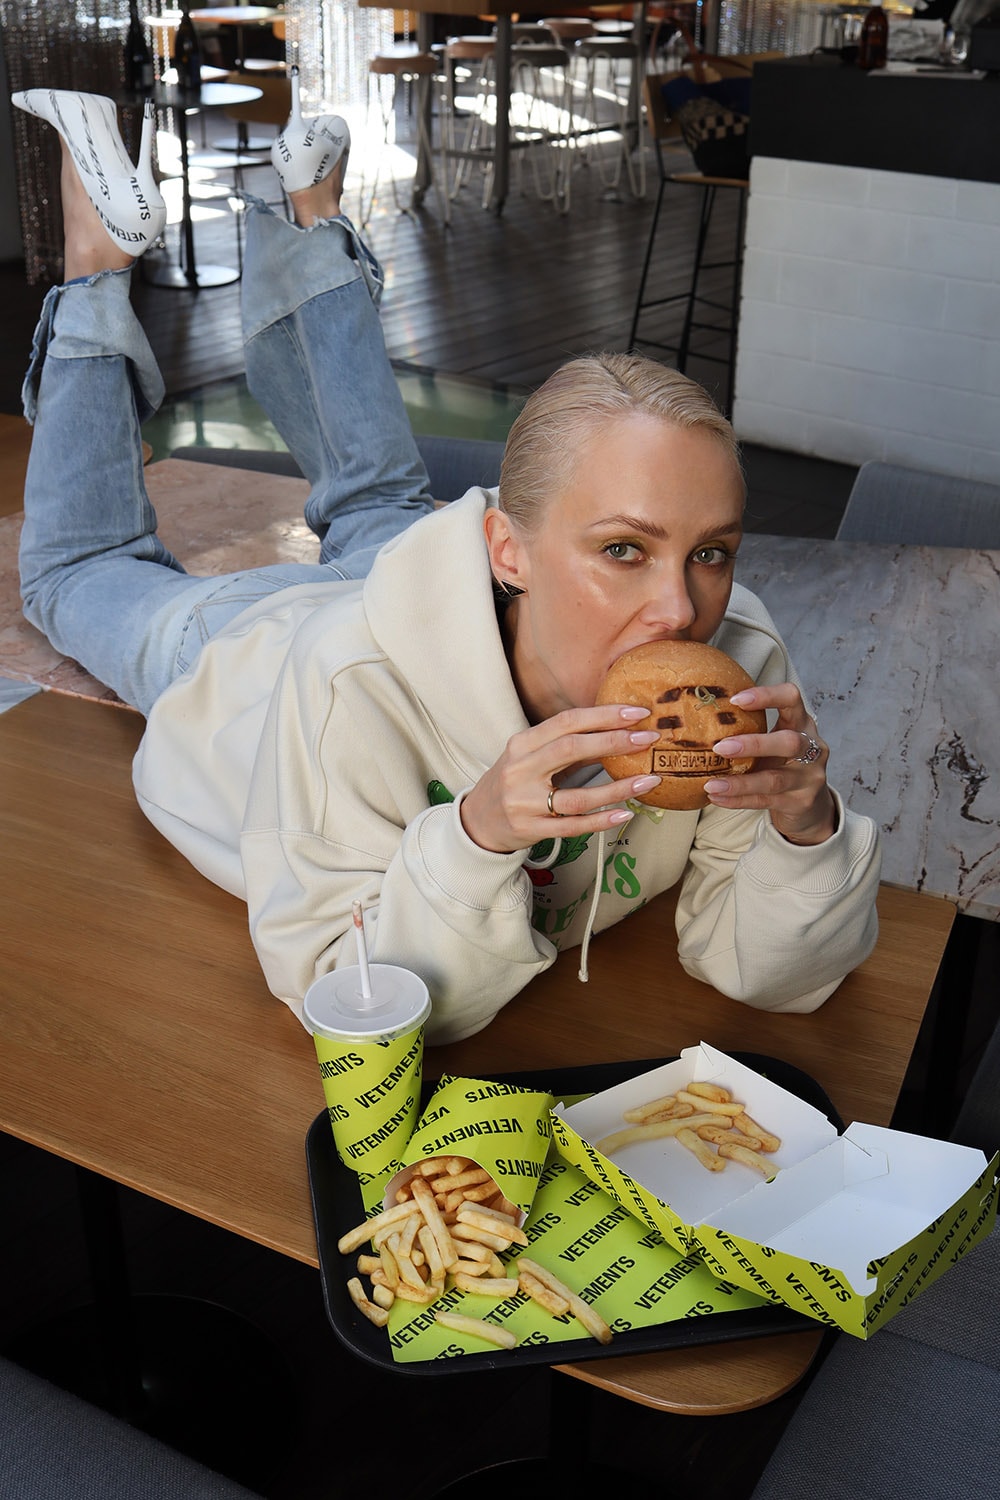 VETEMENTS Burger 2.0 Next Level Edition Combo Meal Vegan Plant-Based Fries Drink KM20 Olga Karput